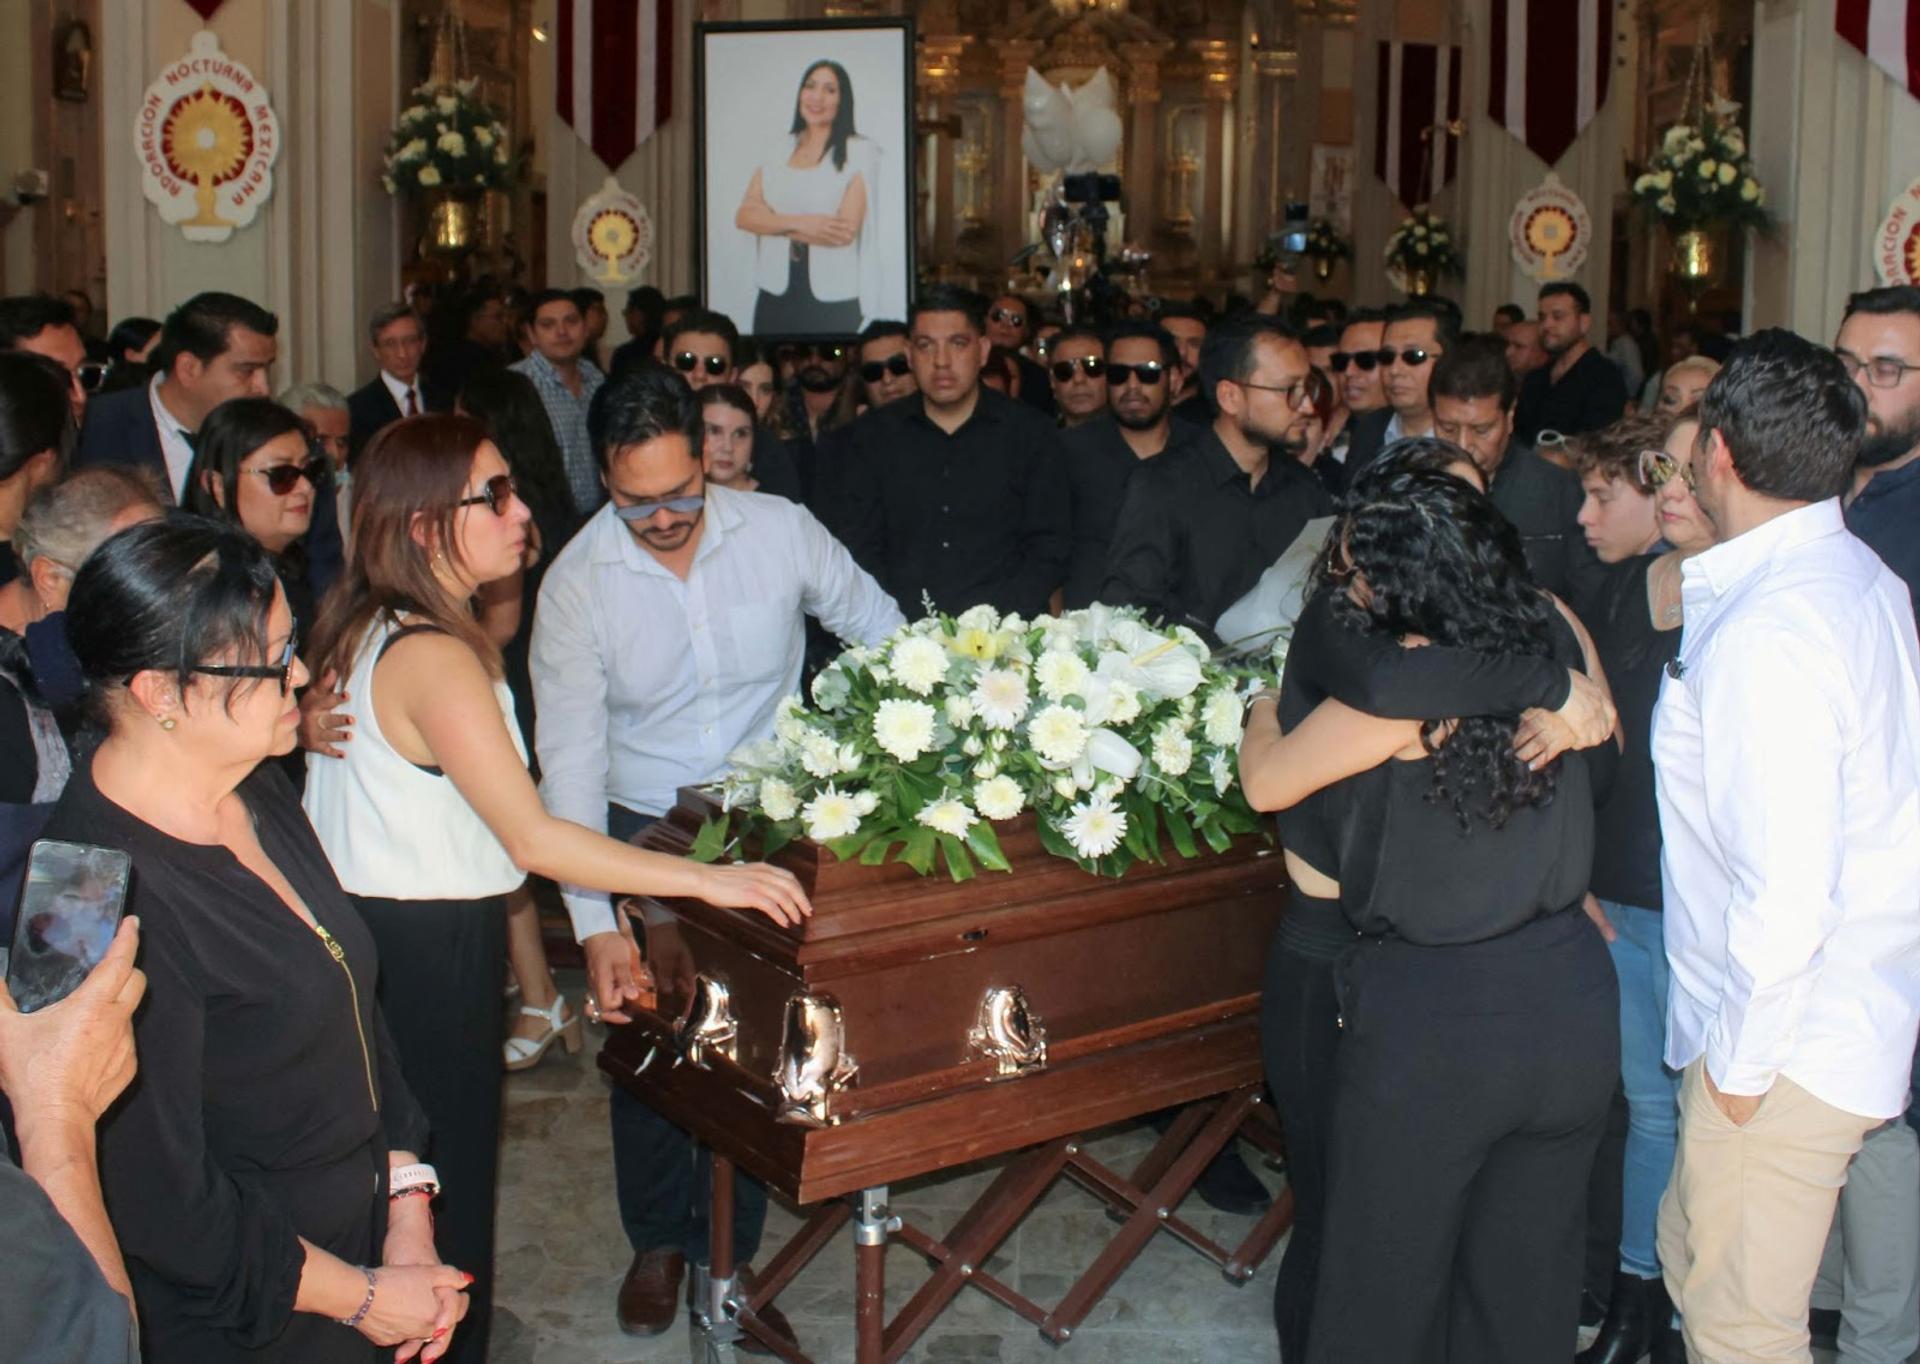 Mexico political funeral